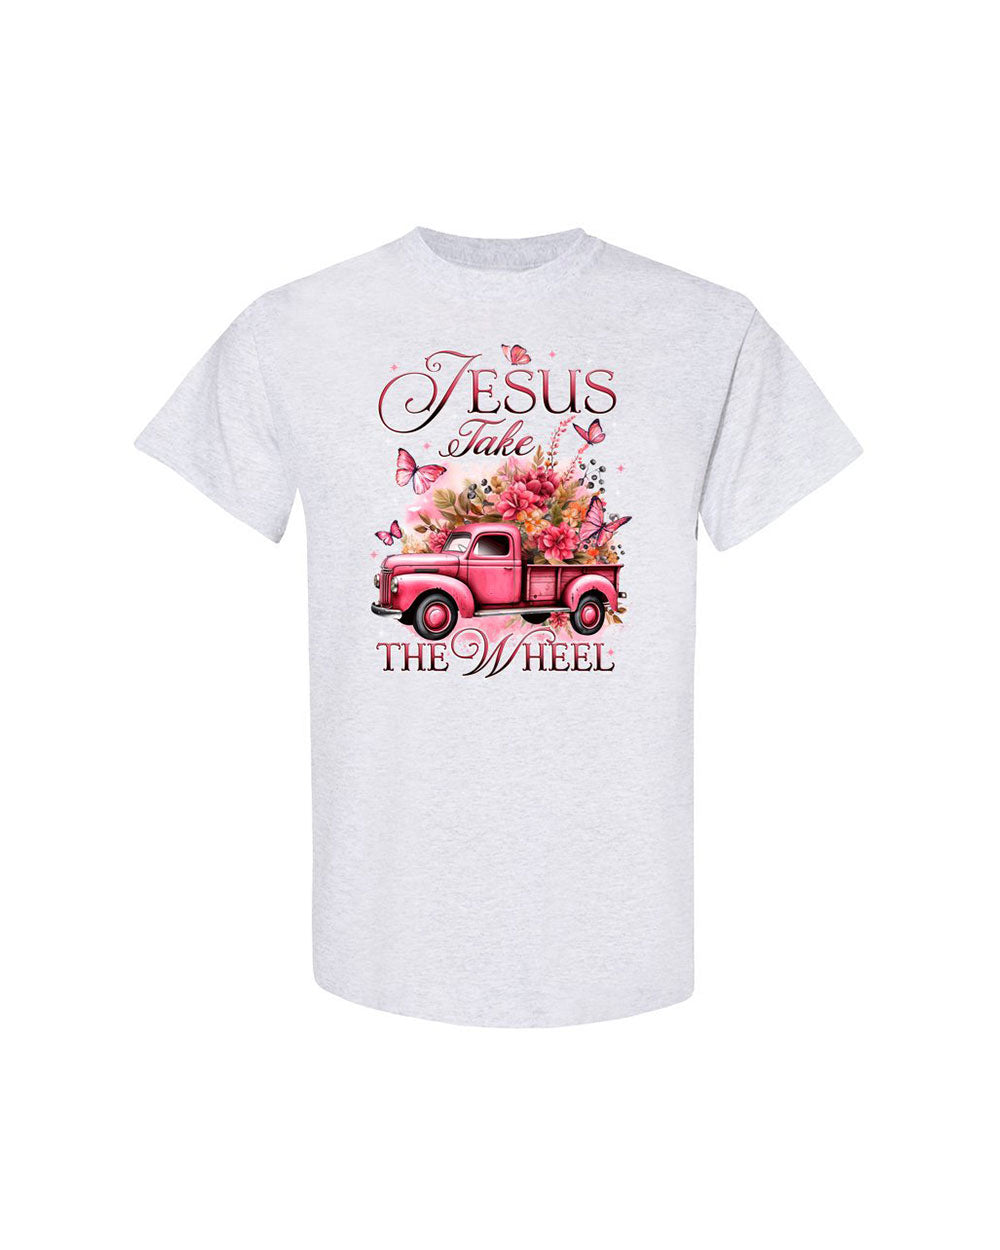 Jesus Take The Wheel Cotton Shirt - Tytd0112235